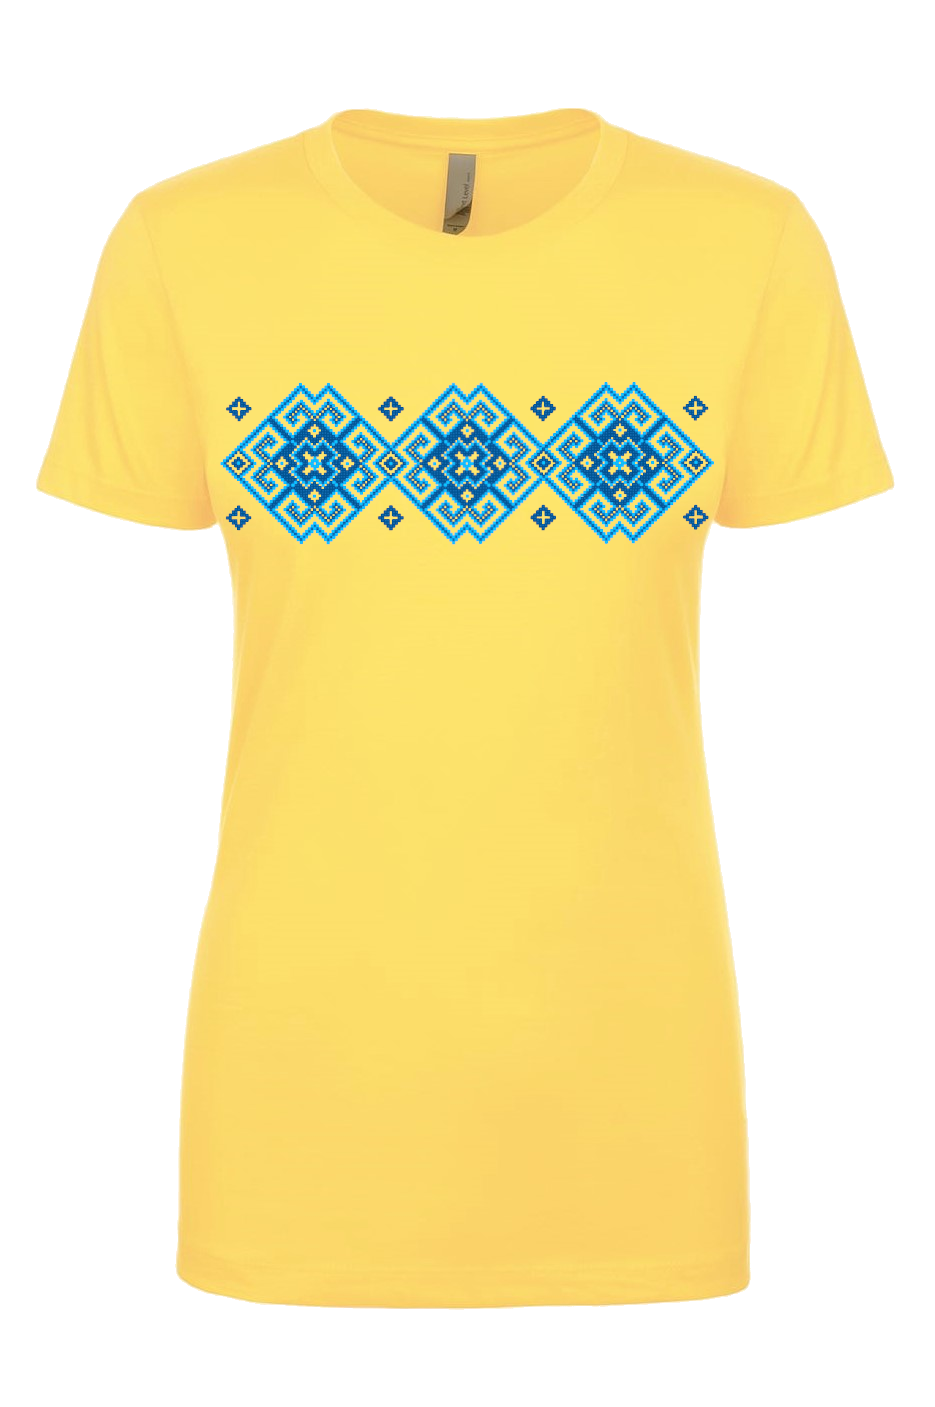 Female fit t-shirt "Vortex" blue